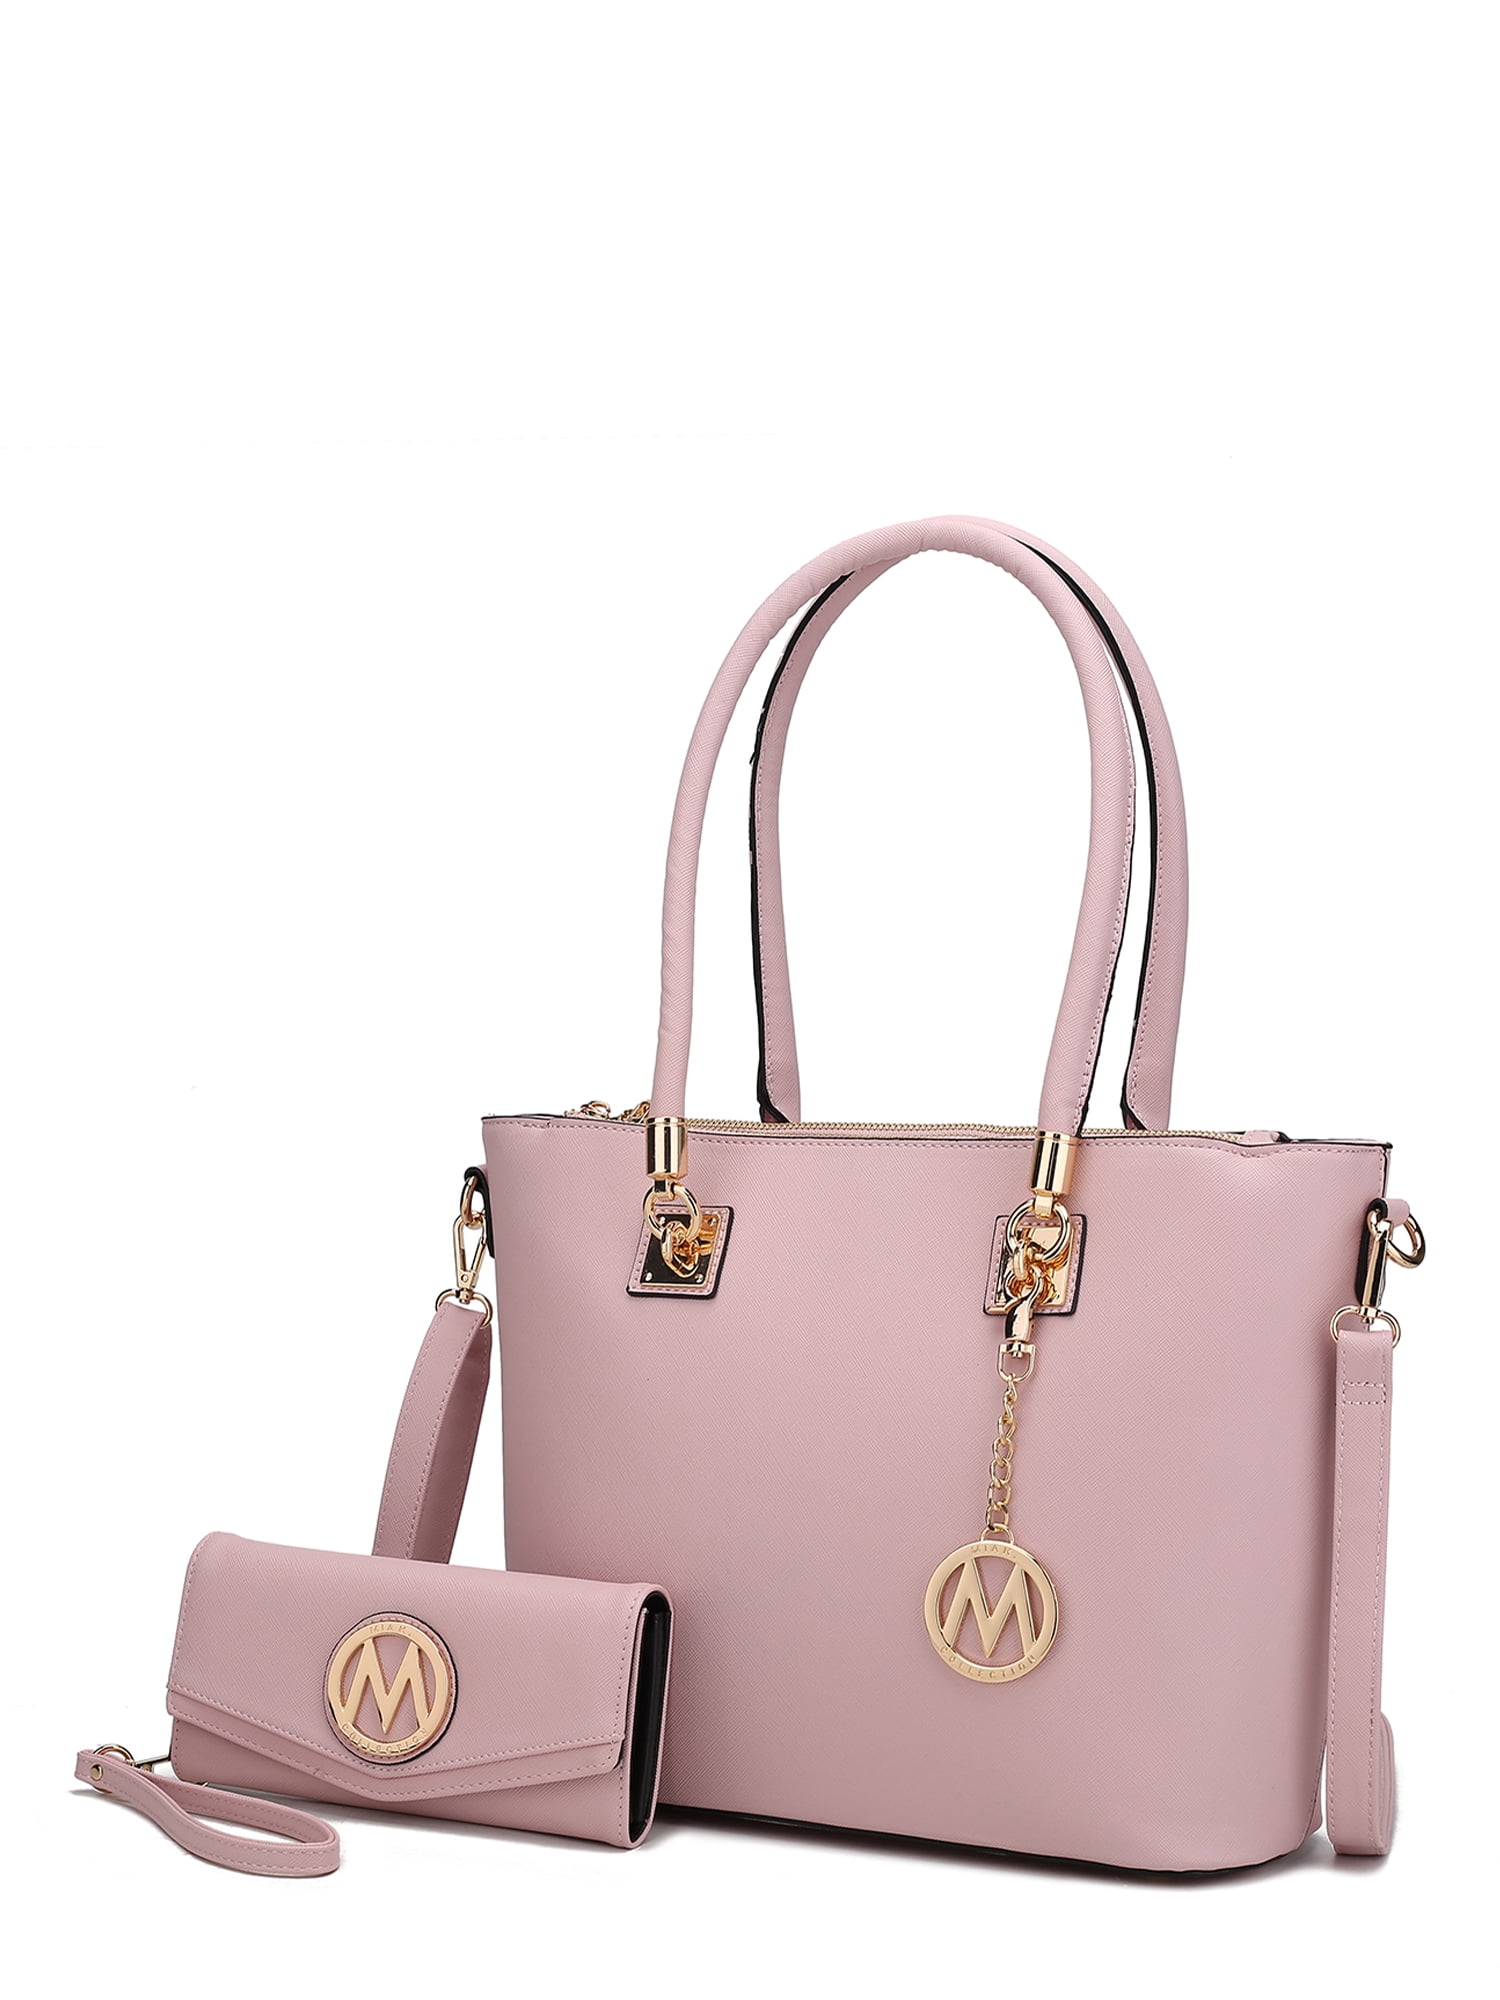 Steve Madden Bregine Pink Satchel Crossbody Bag Tik Tok Viral Trendy | eBay